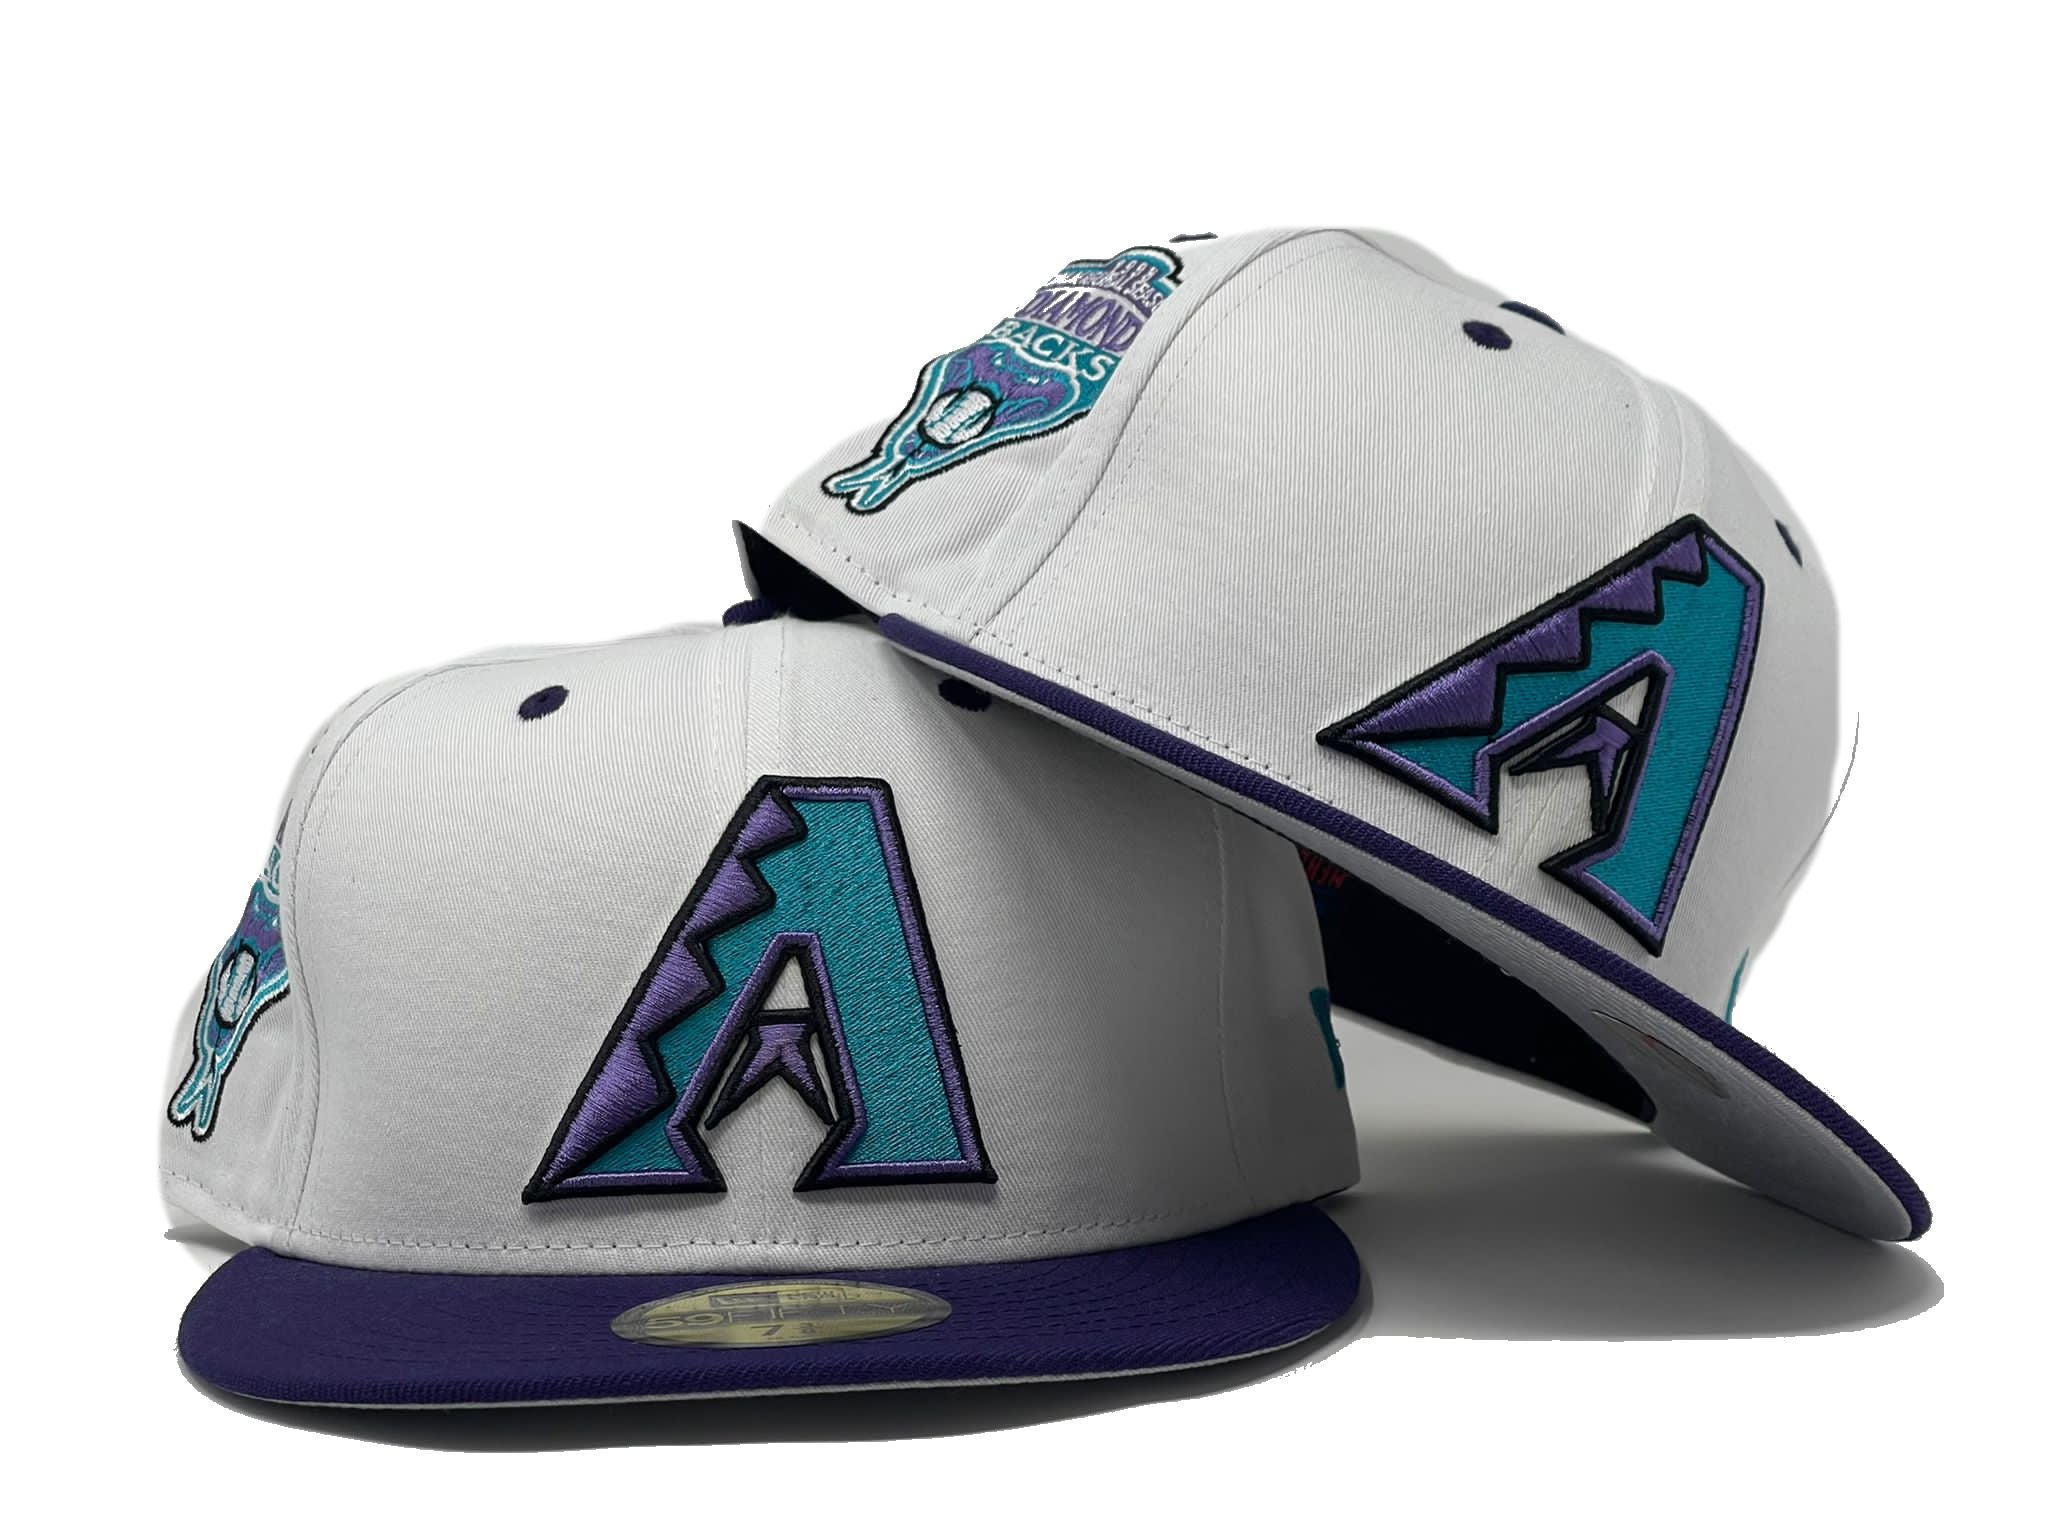 MLB - MLB added a new photo — with Nike Diamond.